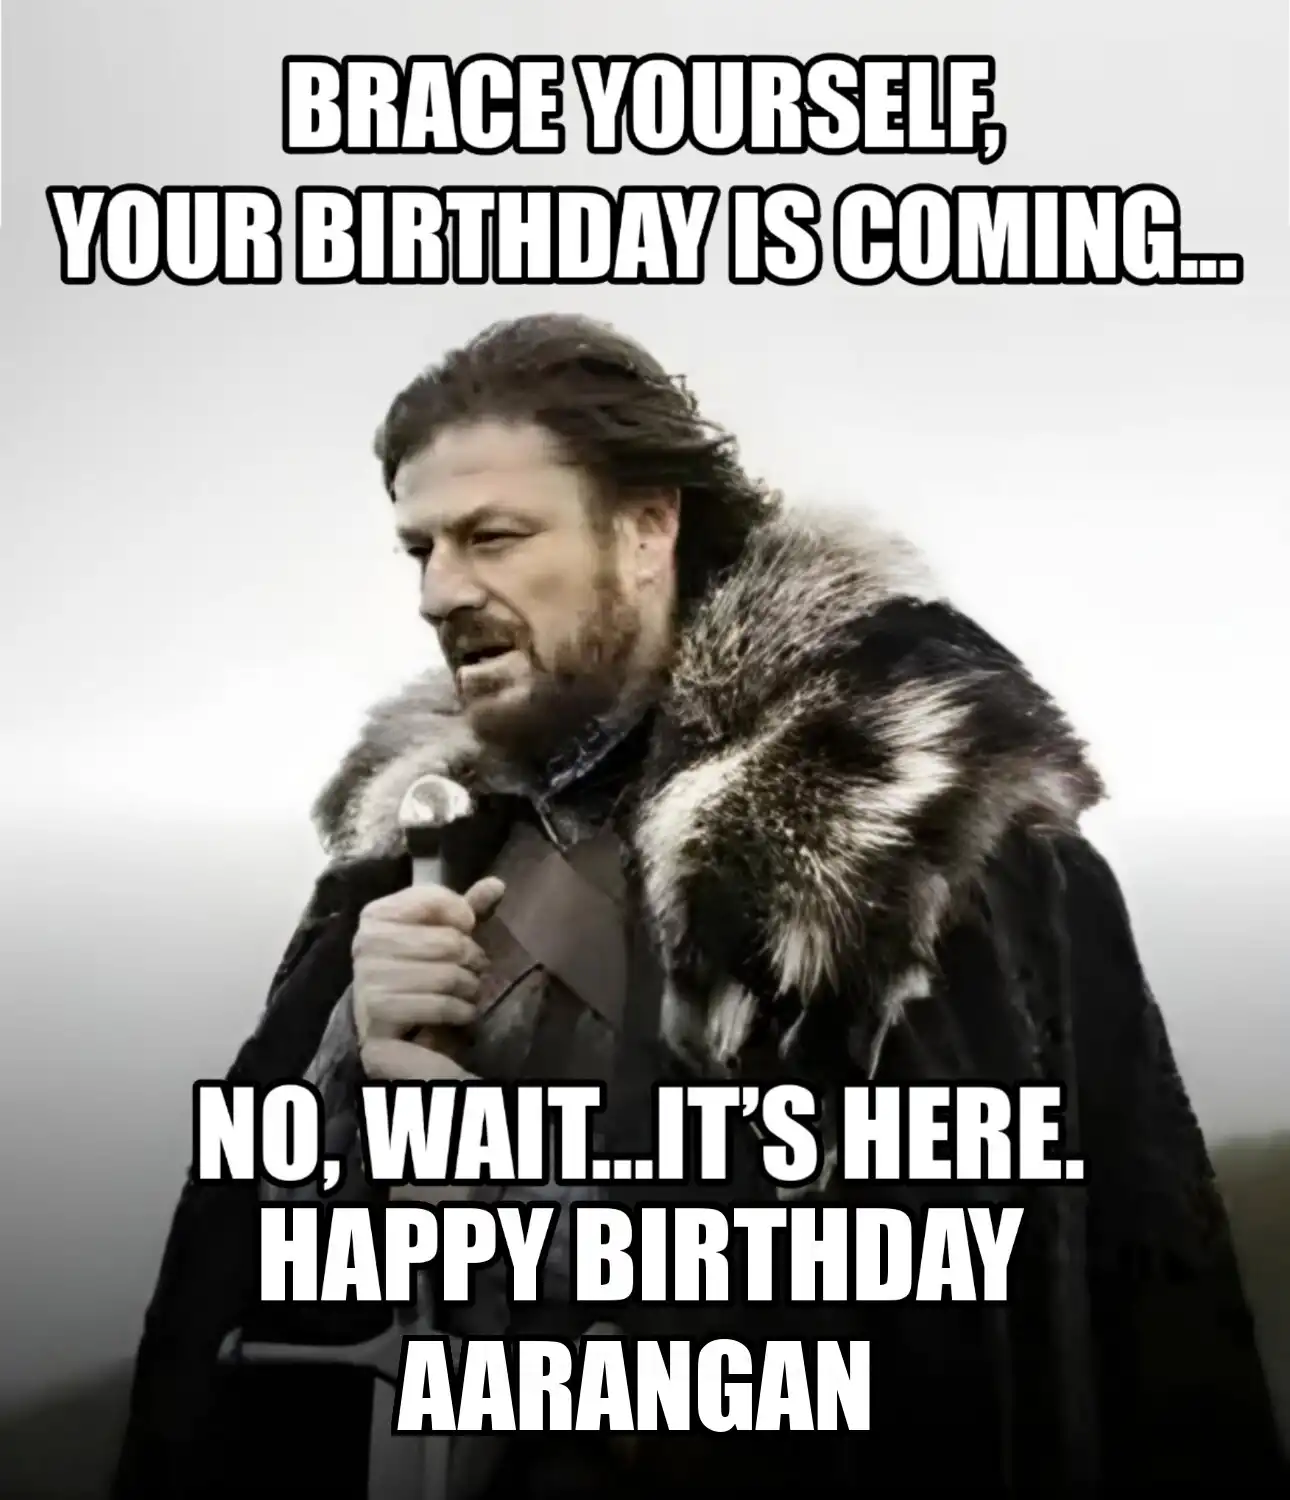 Happy Birthday Aarangan Brace Yourself Your Birthday Is Coming Meme